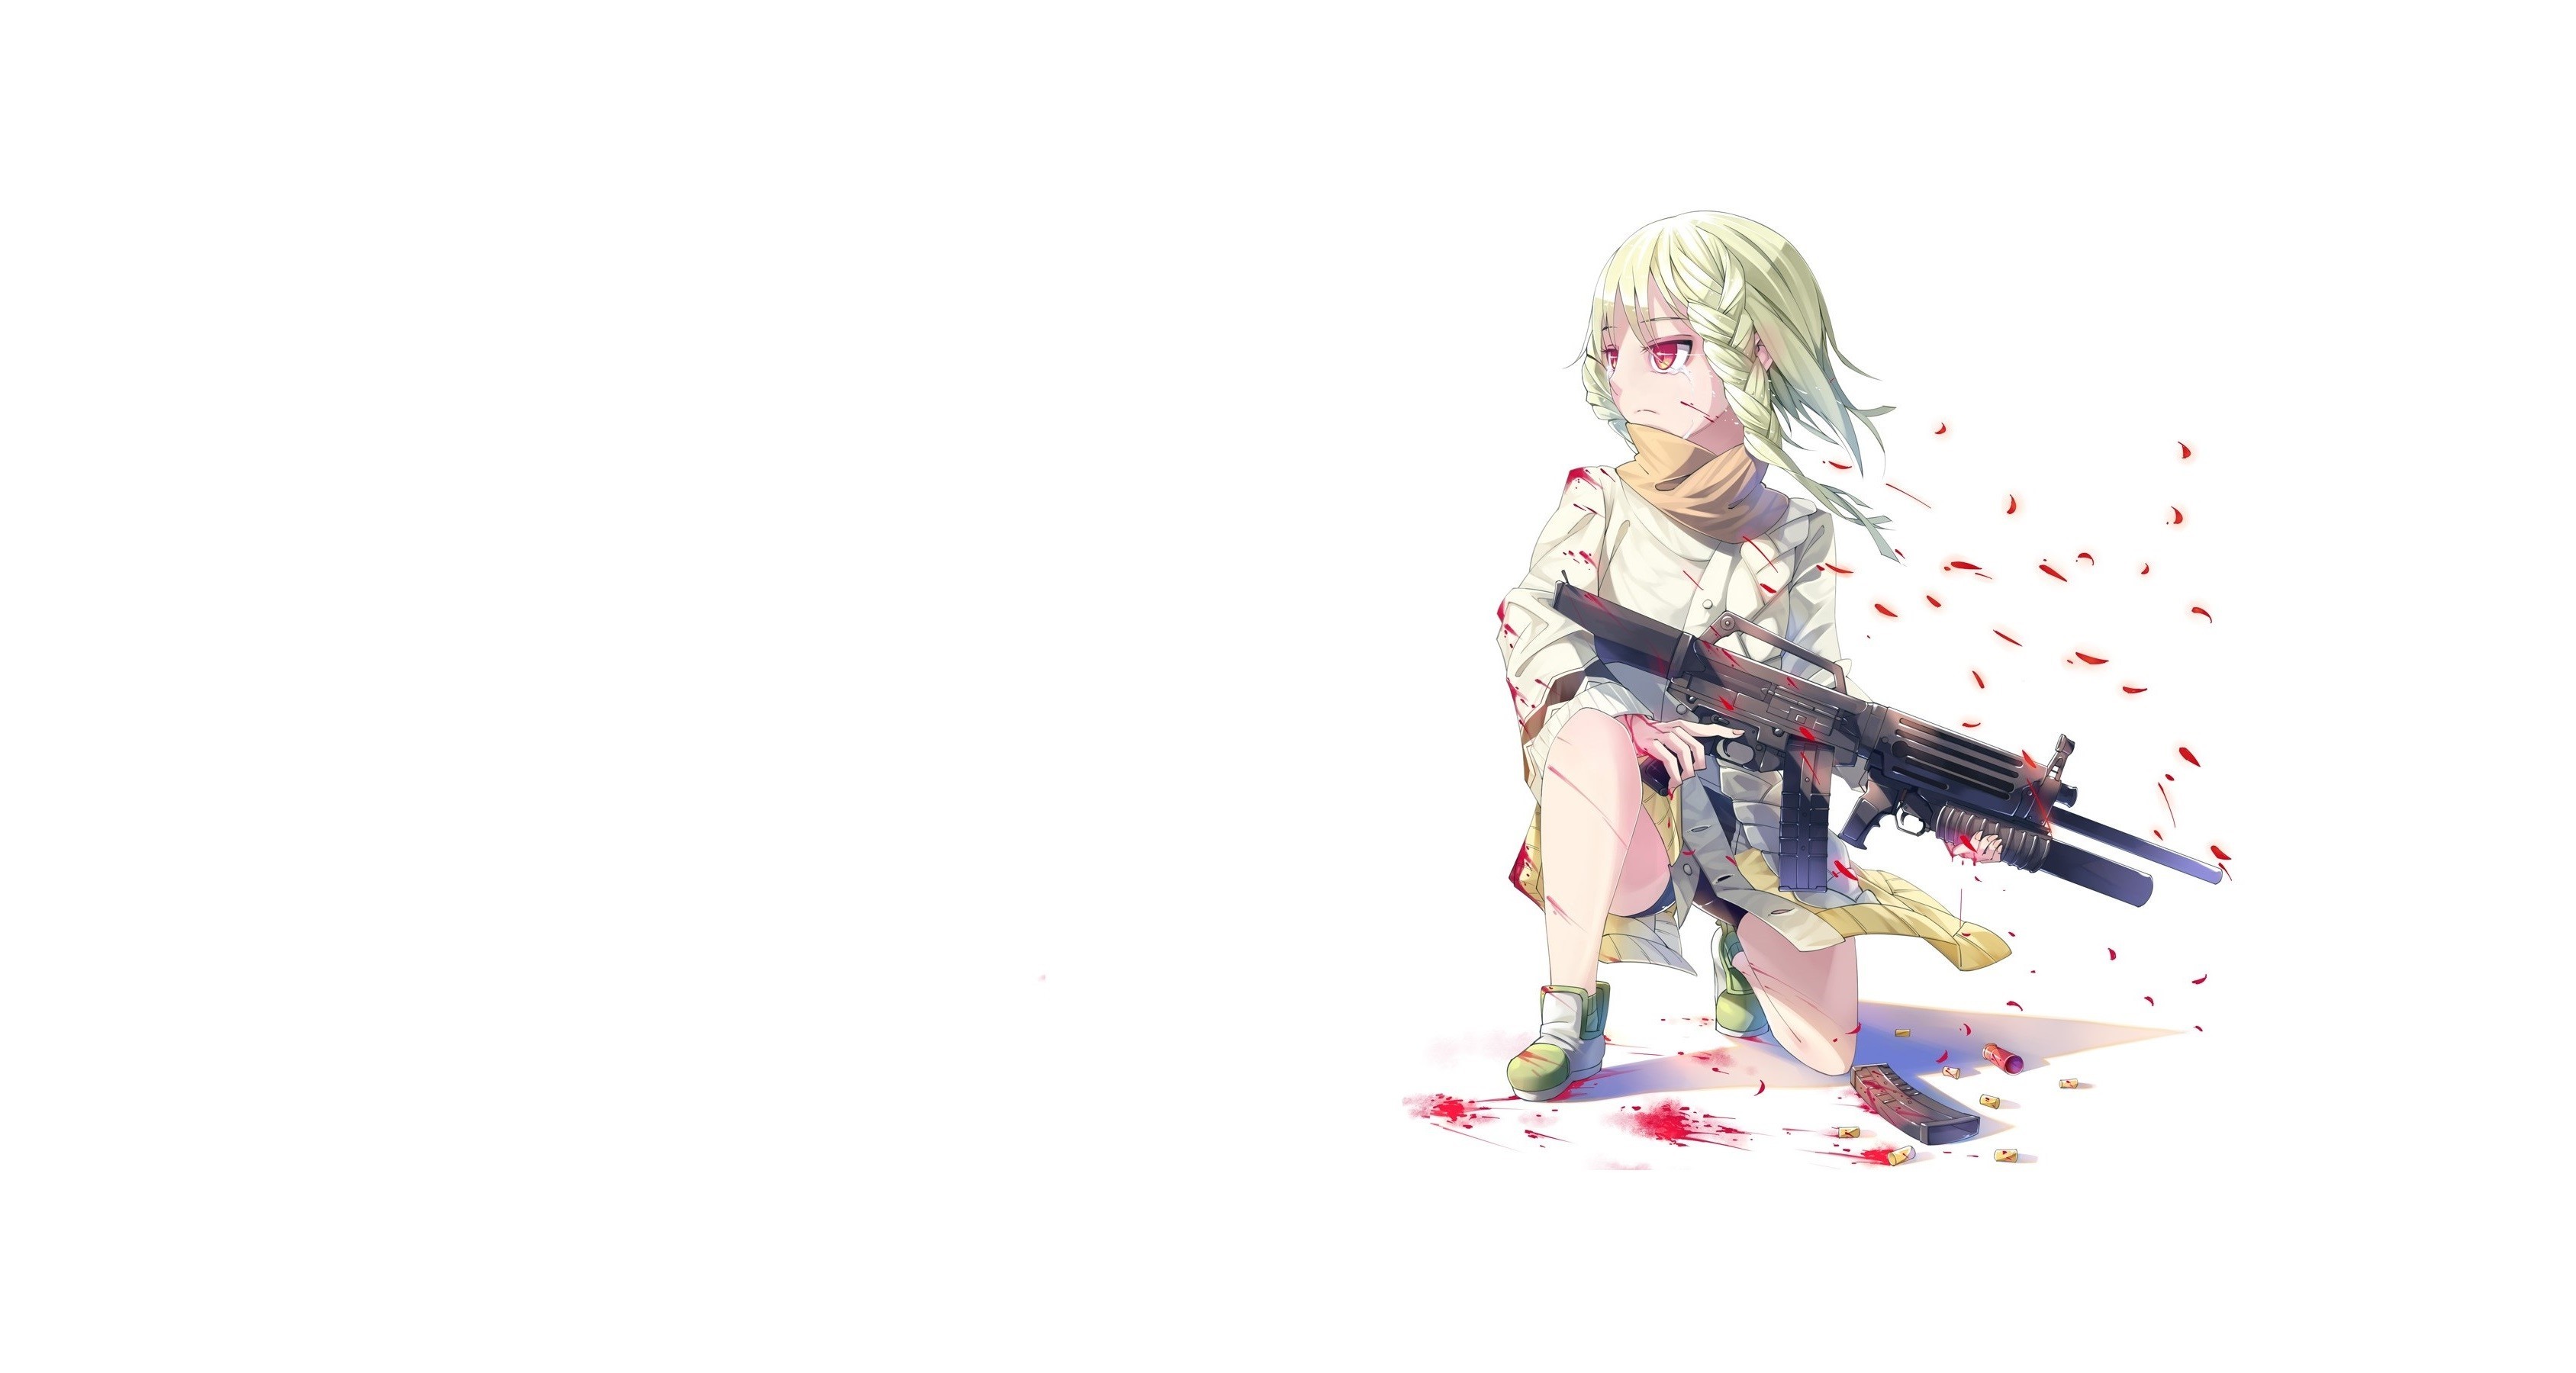  anime  Girls  Anime  Women With Guns  Wallpapers  HD 